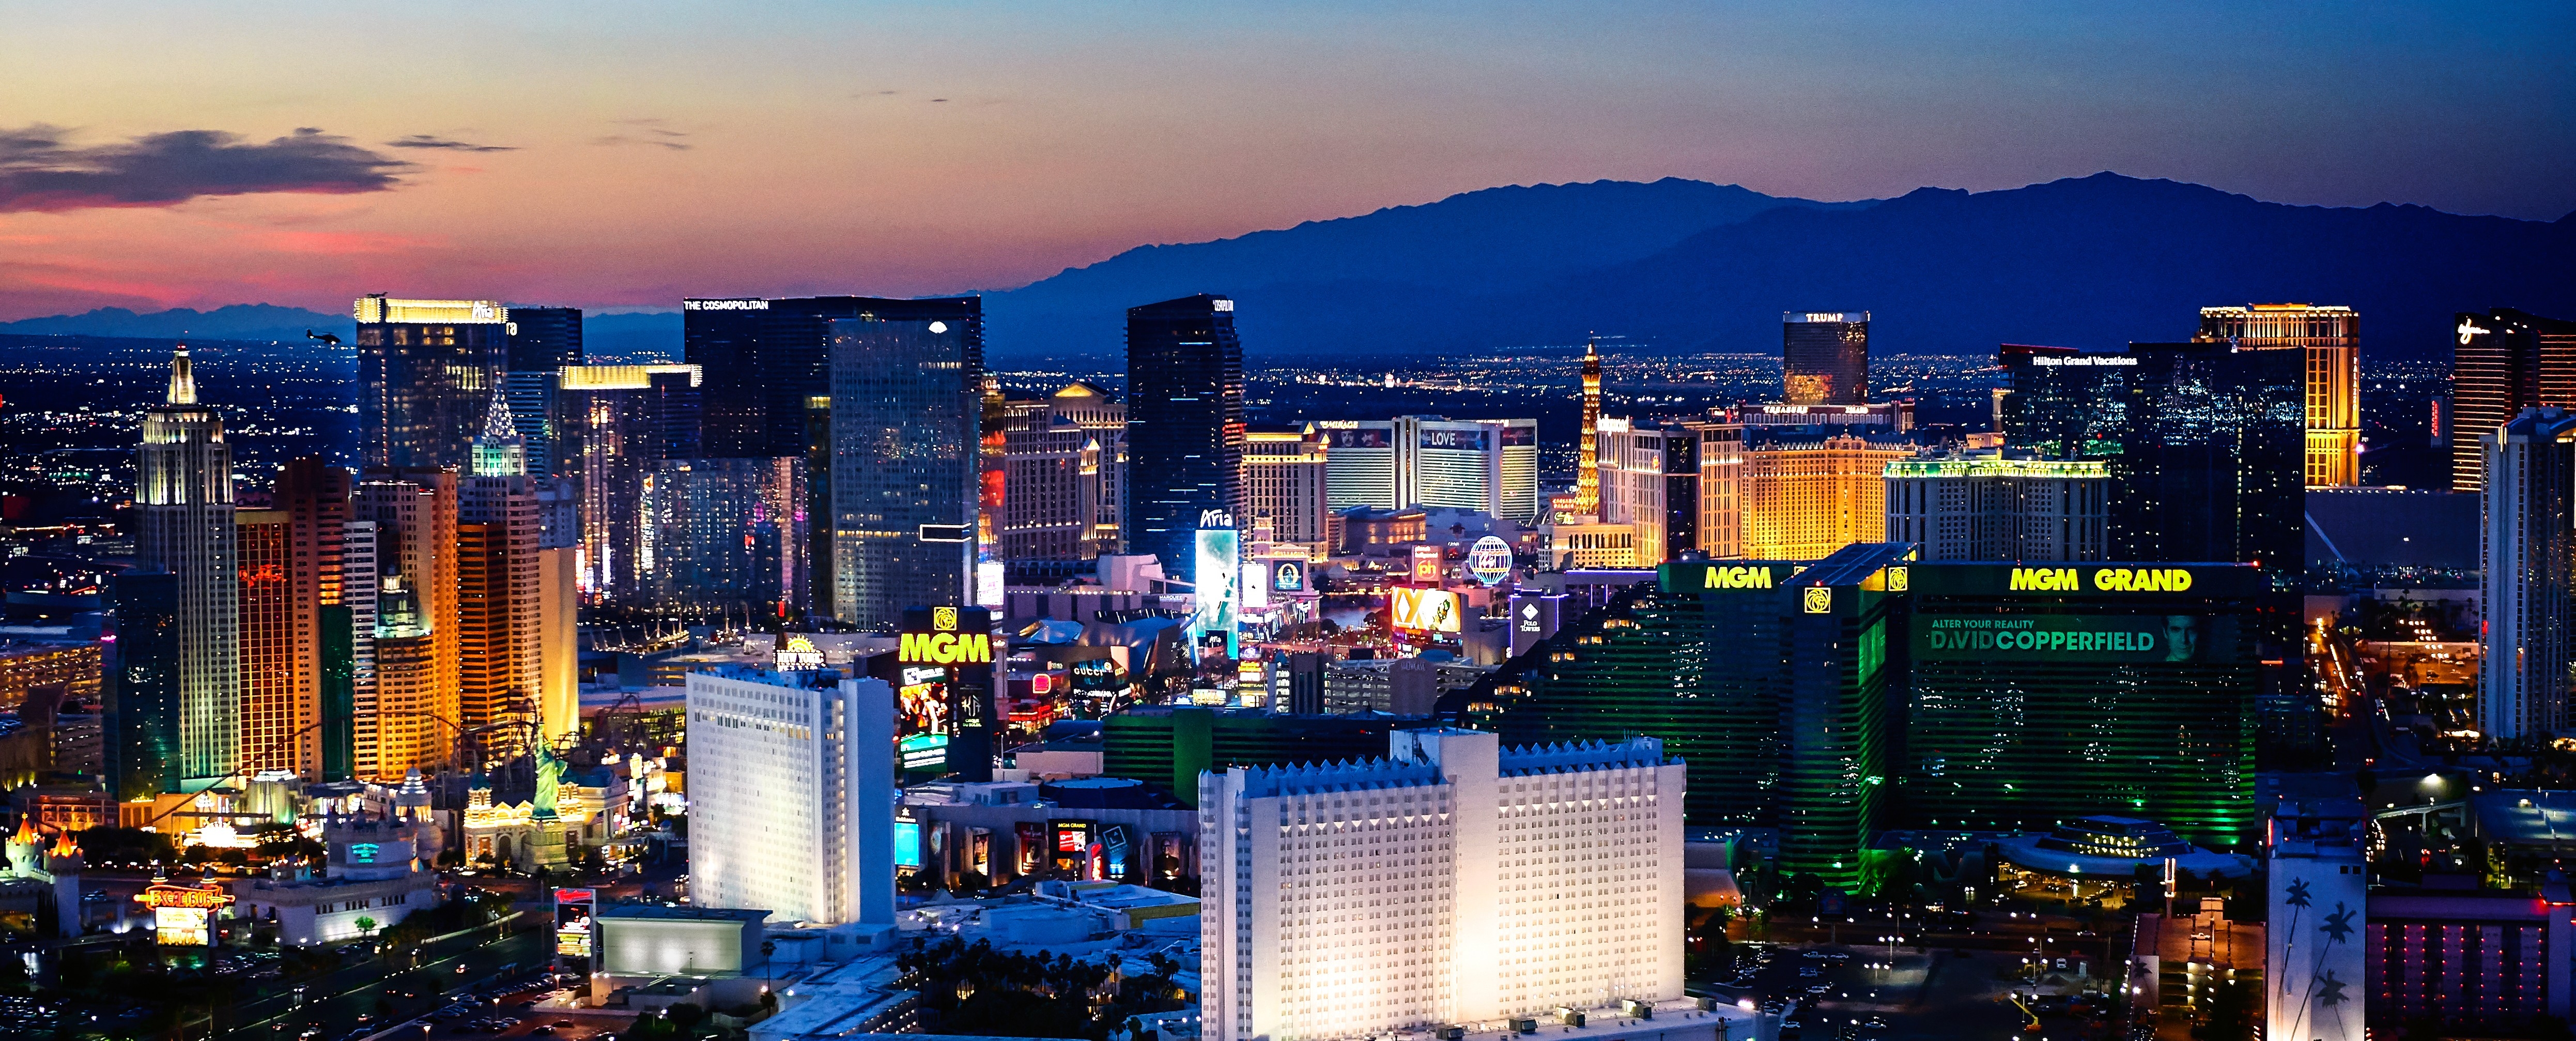 Las Vegas Convention Calendar | Meetings &amp; Conventions-Las Vegas Event Calendar January 2020